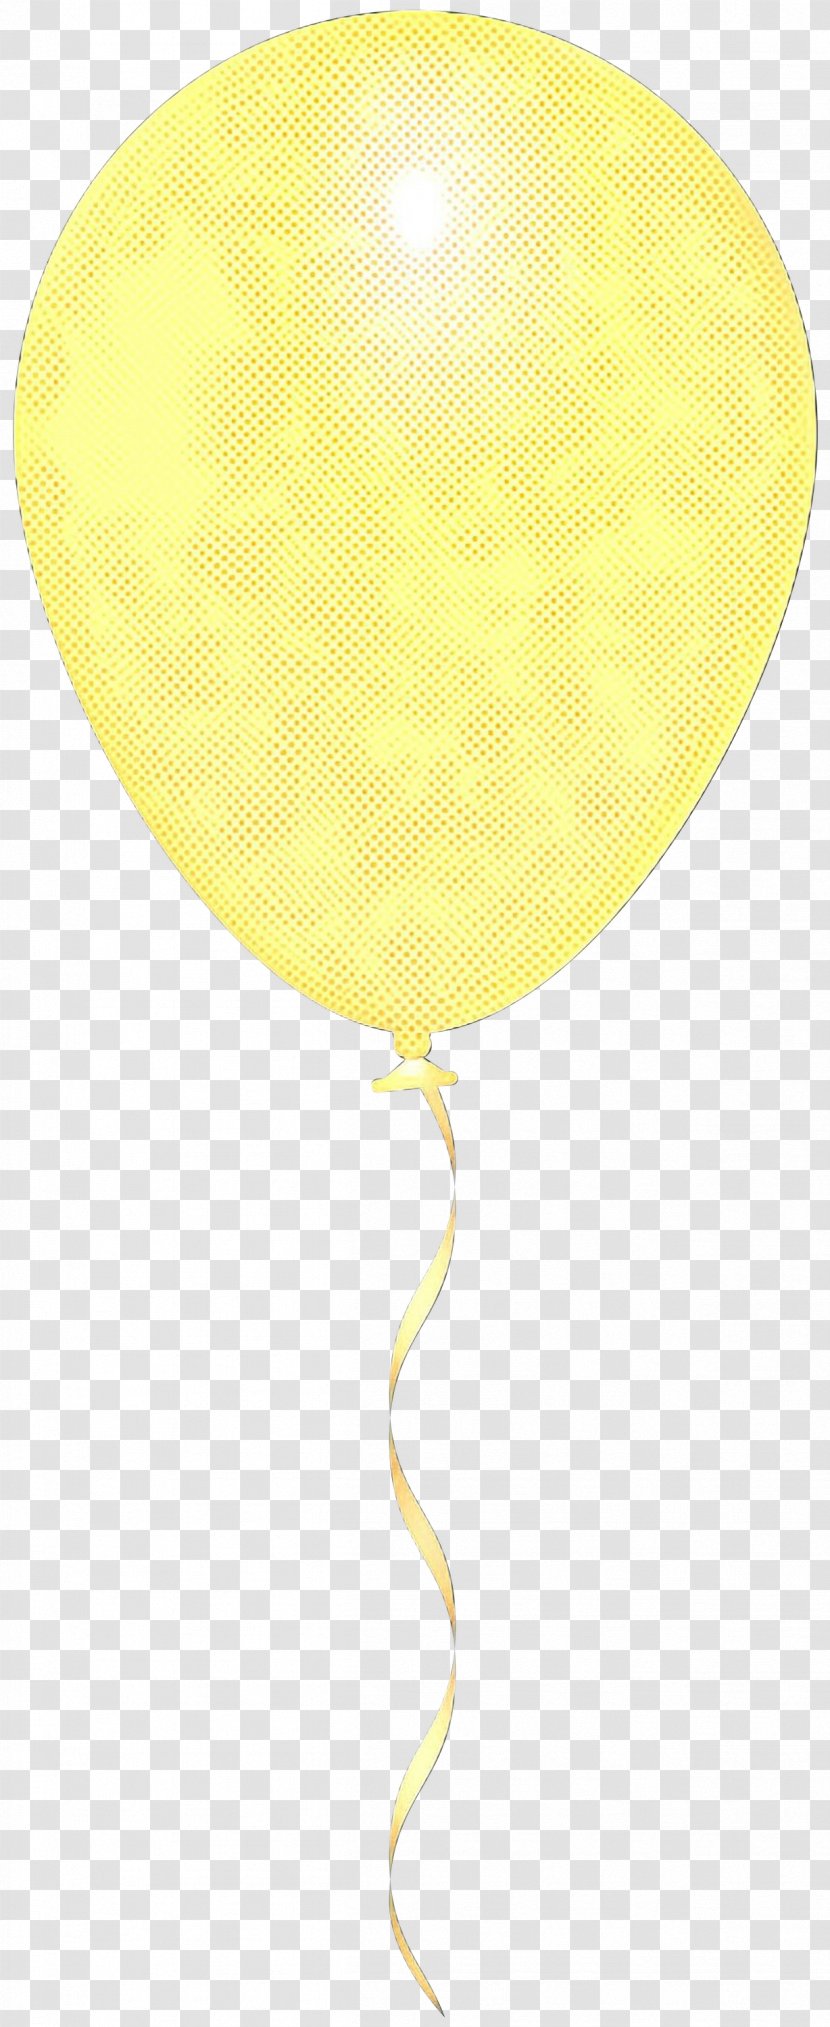 Balloon Cartoon - Retro - Party Supply Yellow Transparent PNG